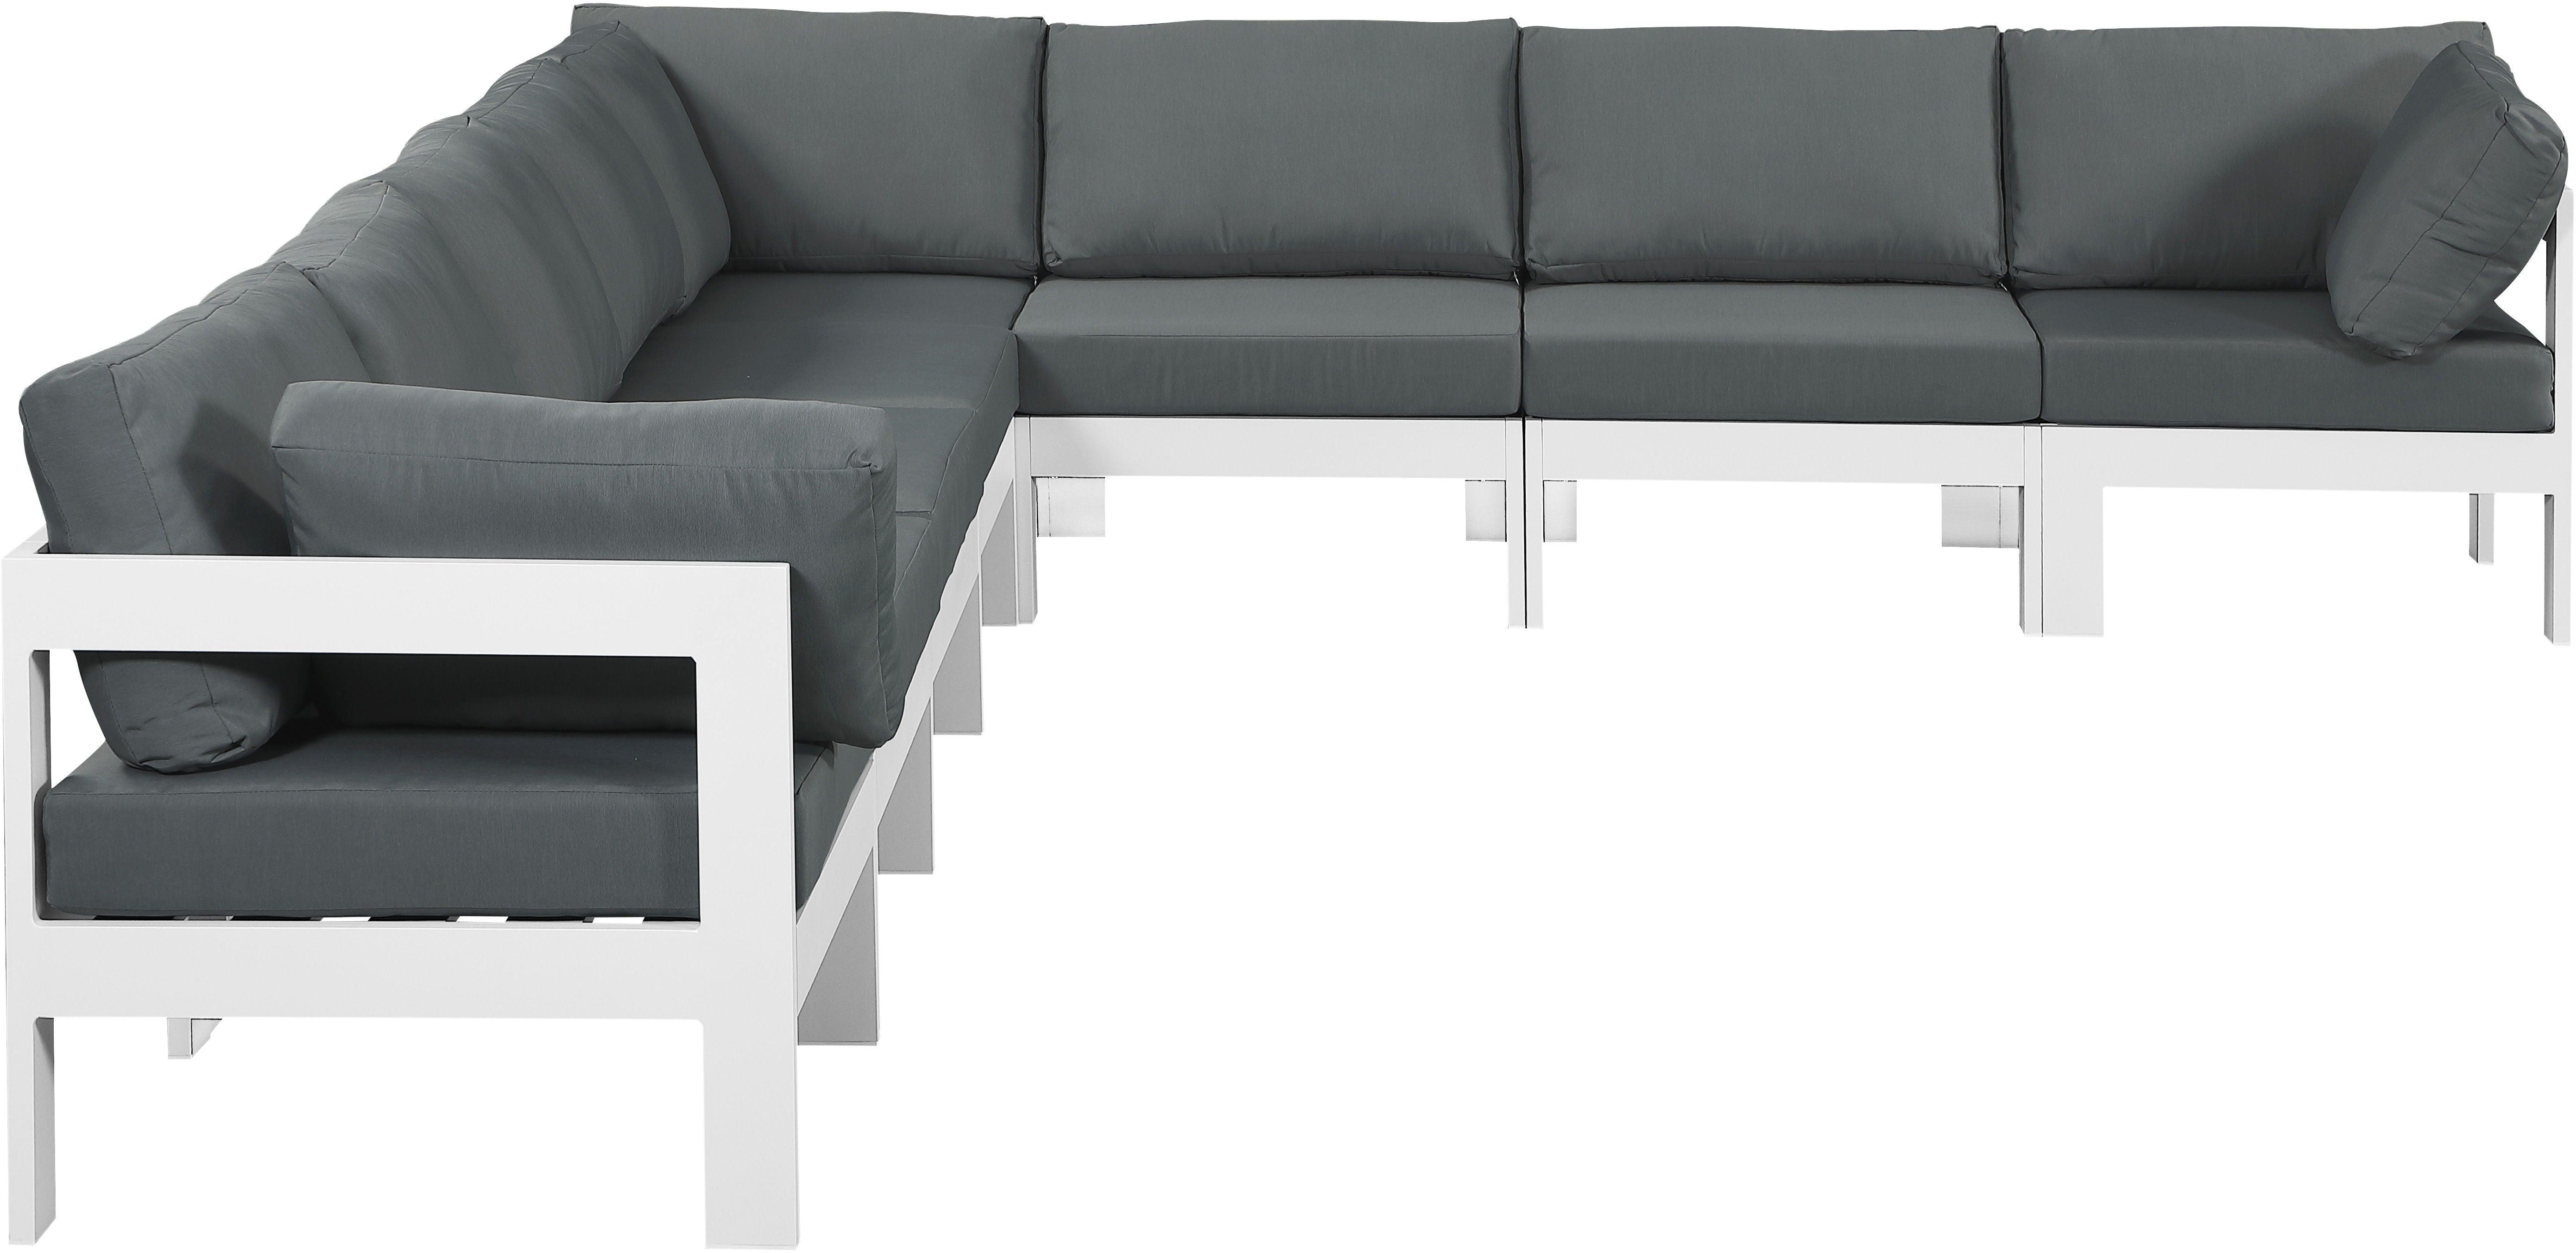 Meridian Furniture - Nizuc - Outdoor Patio Modular Sectional 8 Piece - Grey - Fabric - 5th Avenue Furniture